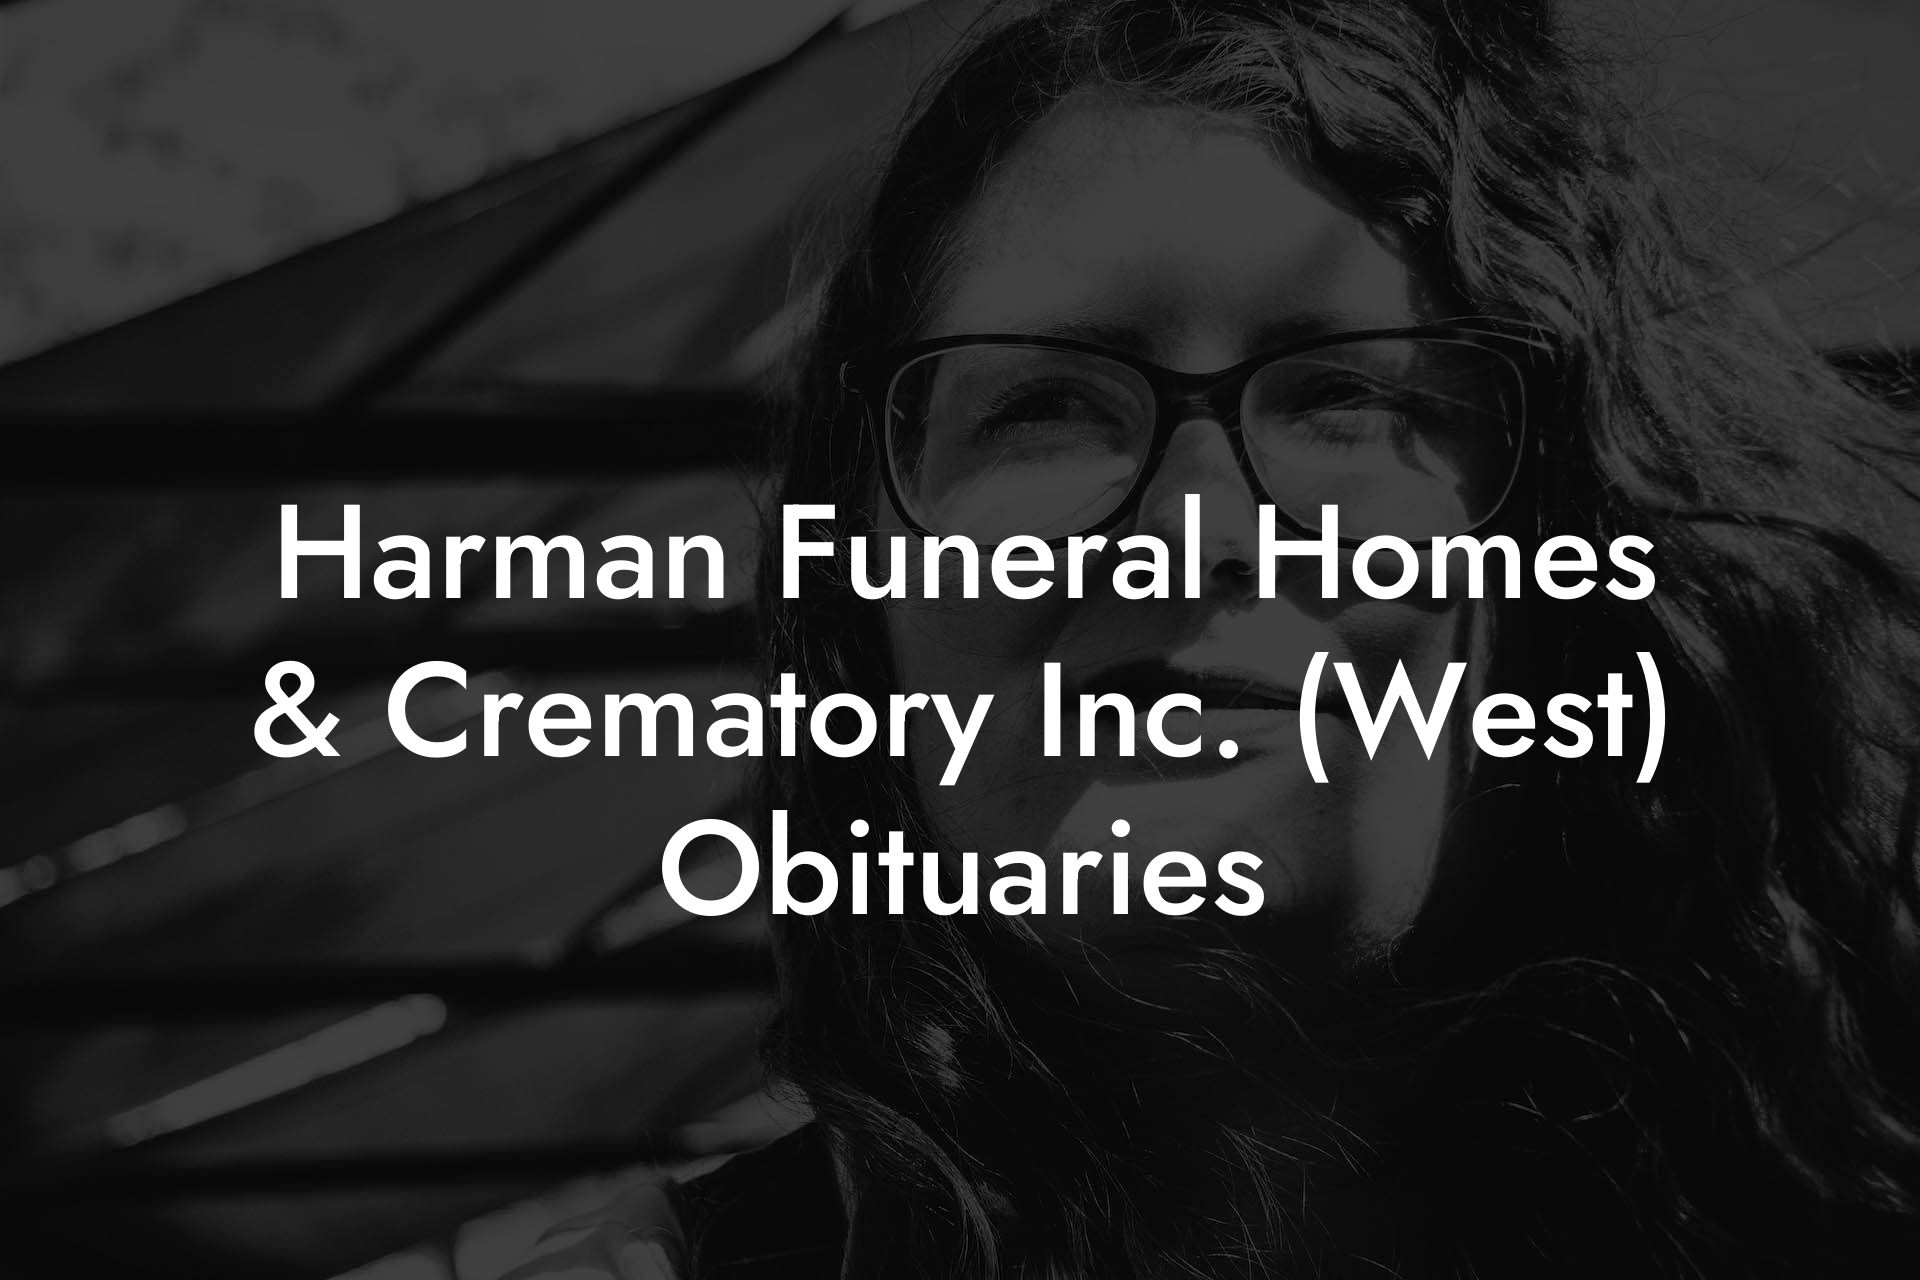 Harman Funeral Homes & Crematory Inc. (West) Obituaries